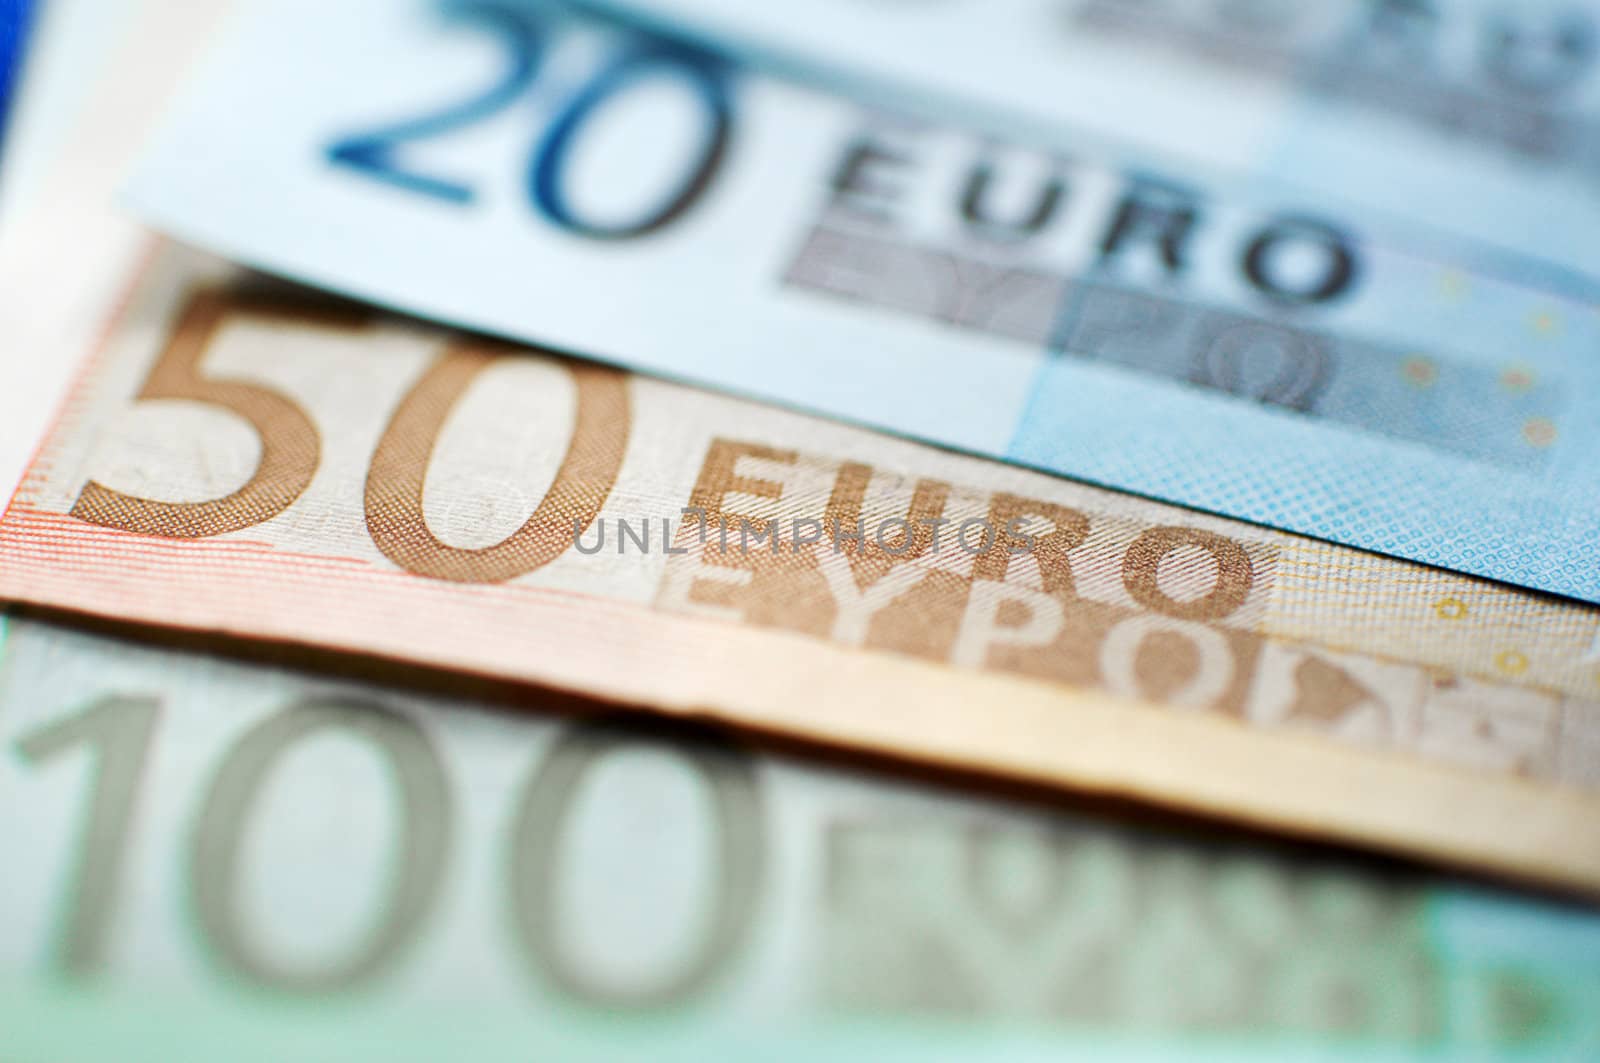 Euro Banknotes closeup. narrow focus.